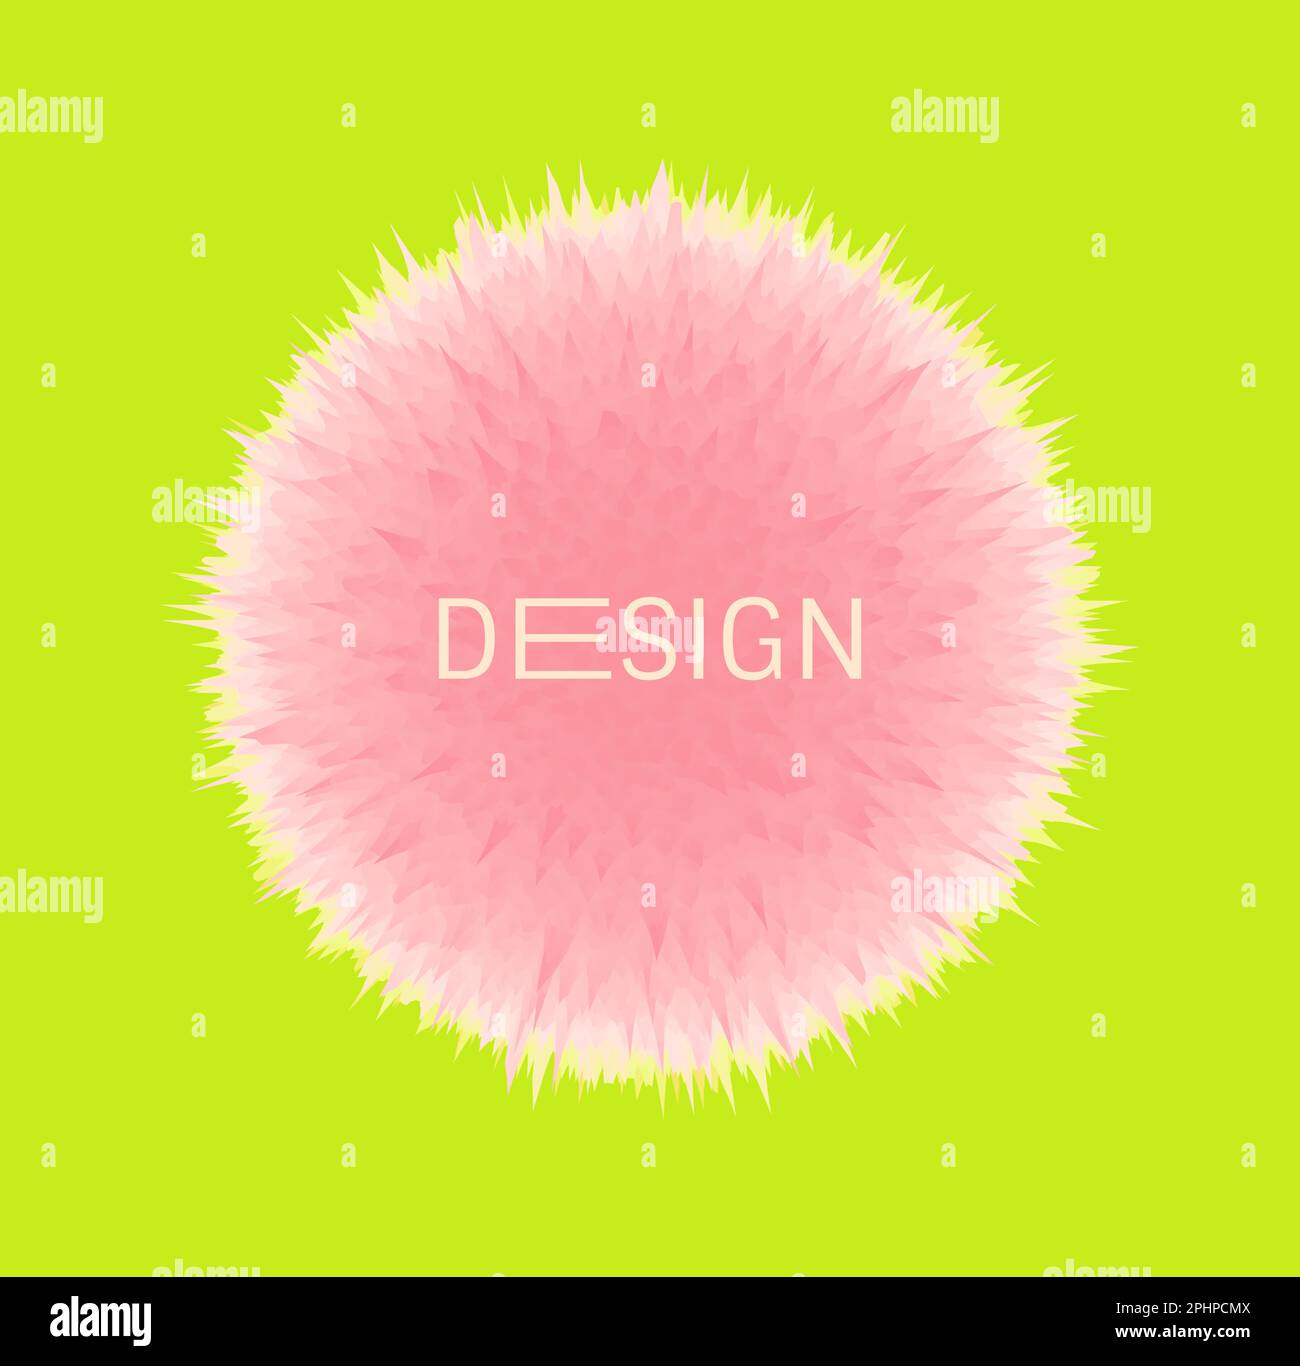 Fluffy shaggy ball. Floral art. Element for design. Vector illustration for advertising, marketing, presentation or greeting card. Stock Vector